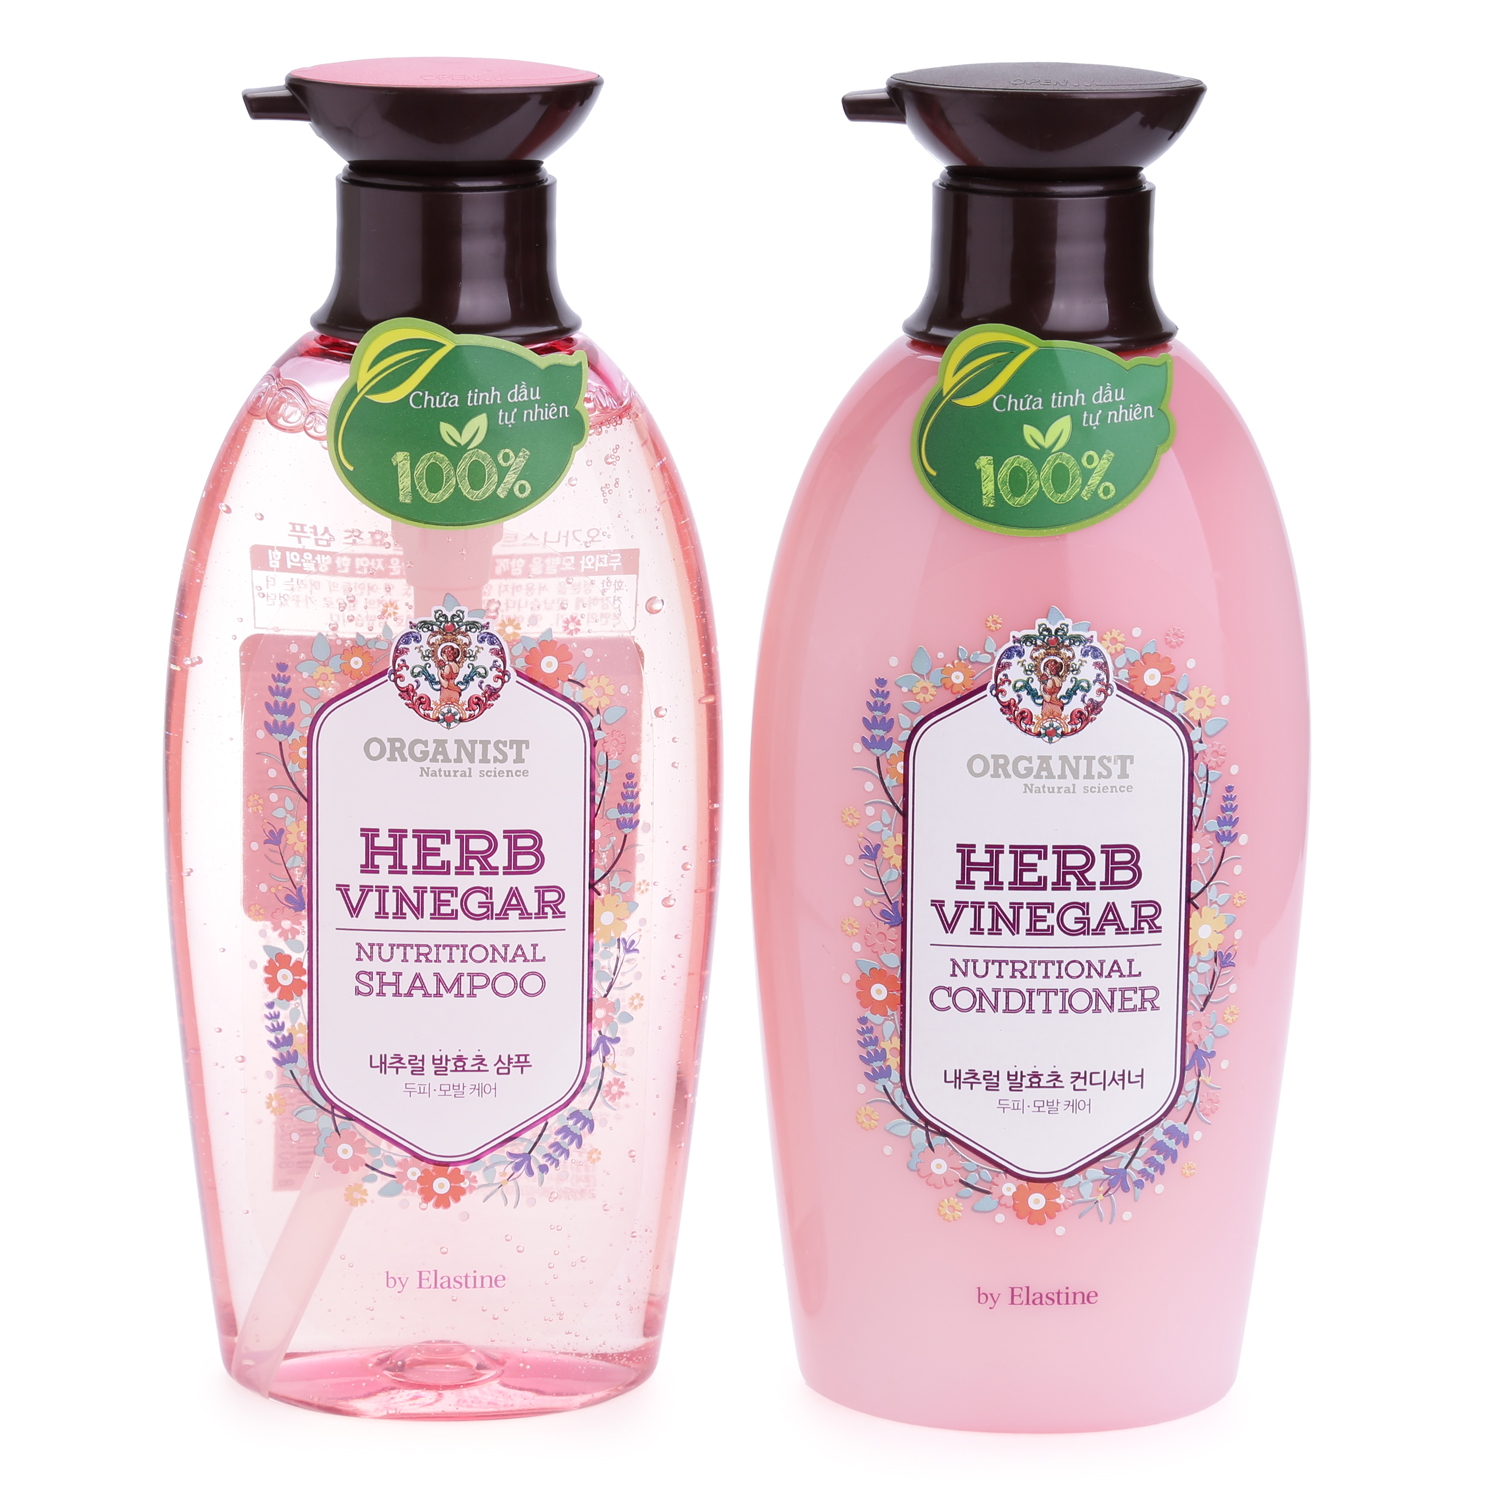 Dầu gội Organist Natural Science Herb Vinegar Nutritional Shampoo 